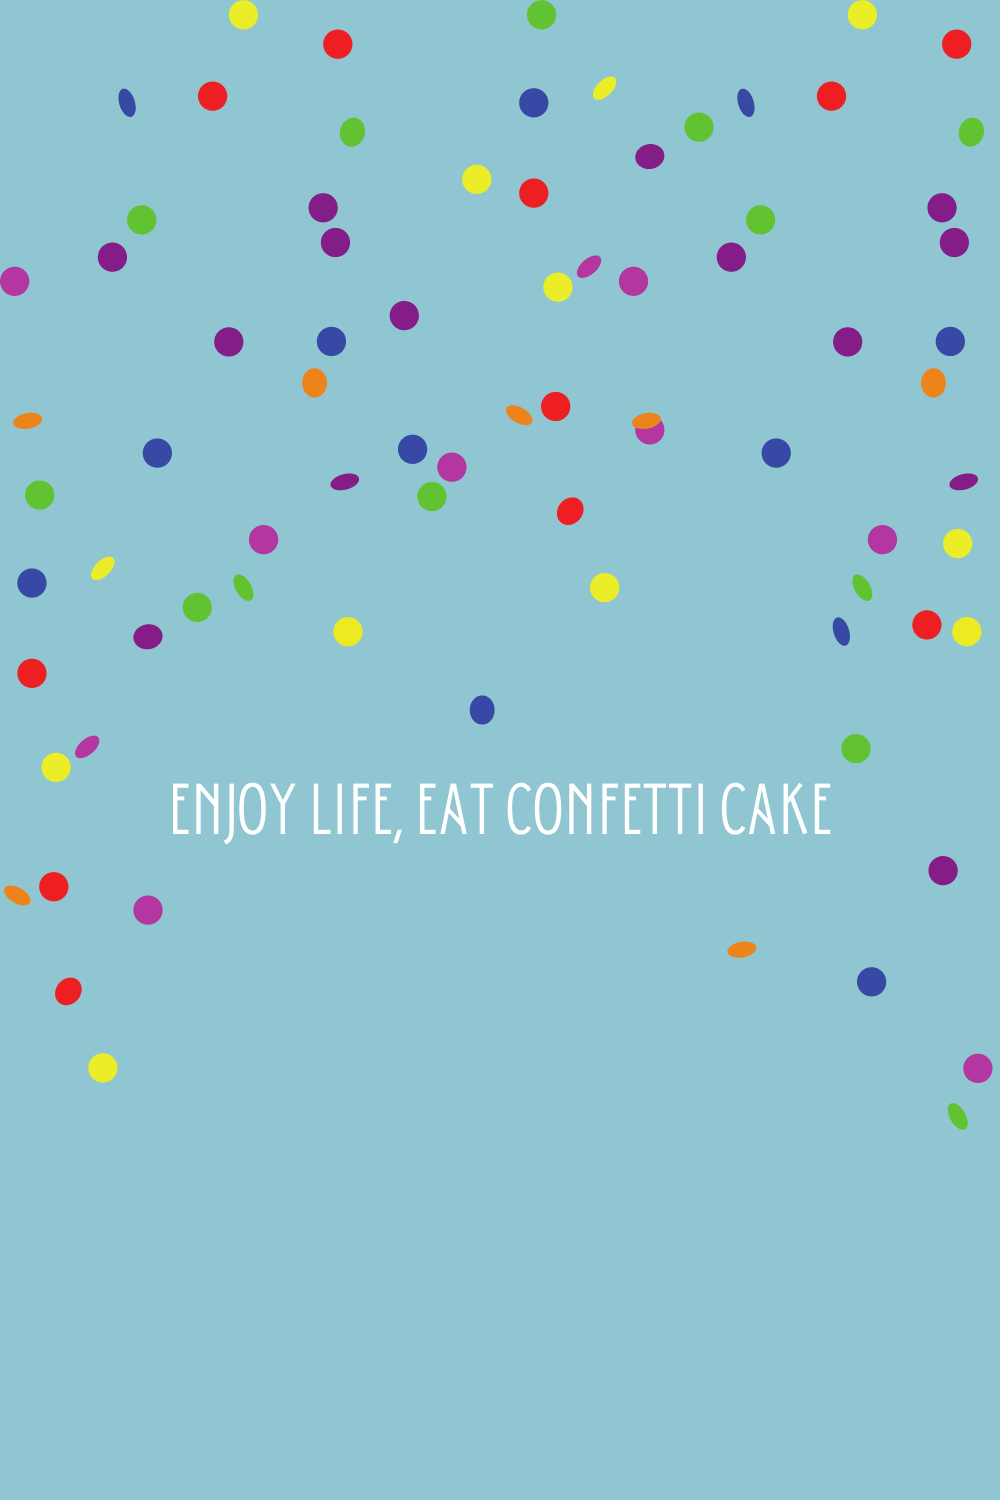 confetti captions & quotes for birthdays